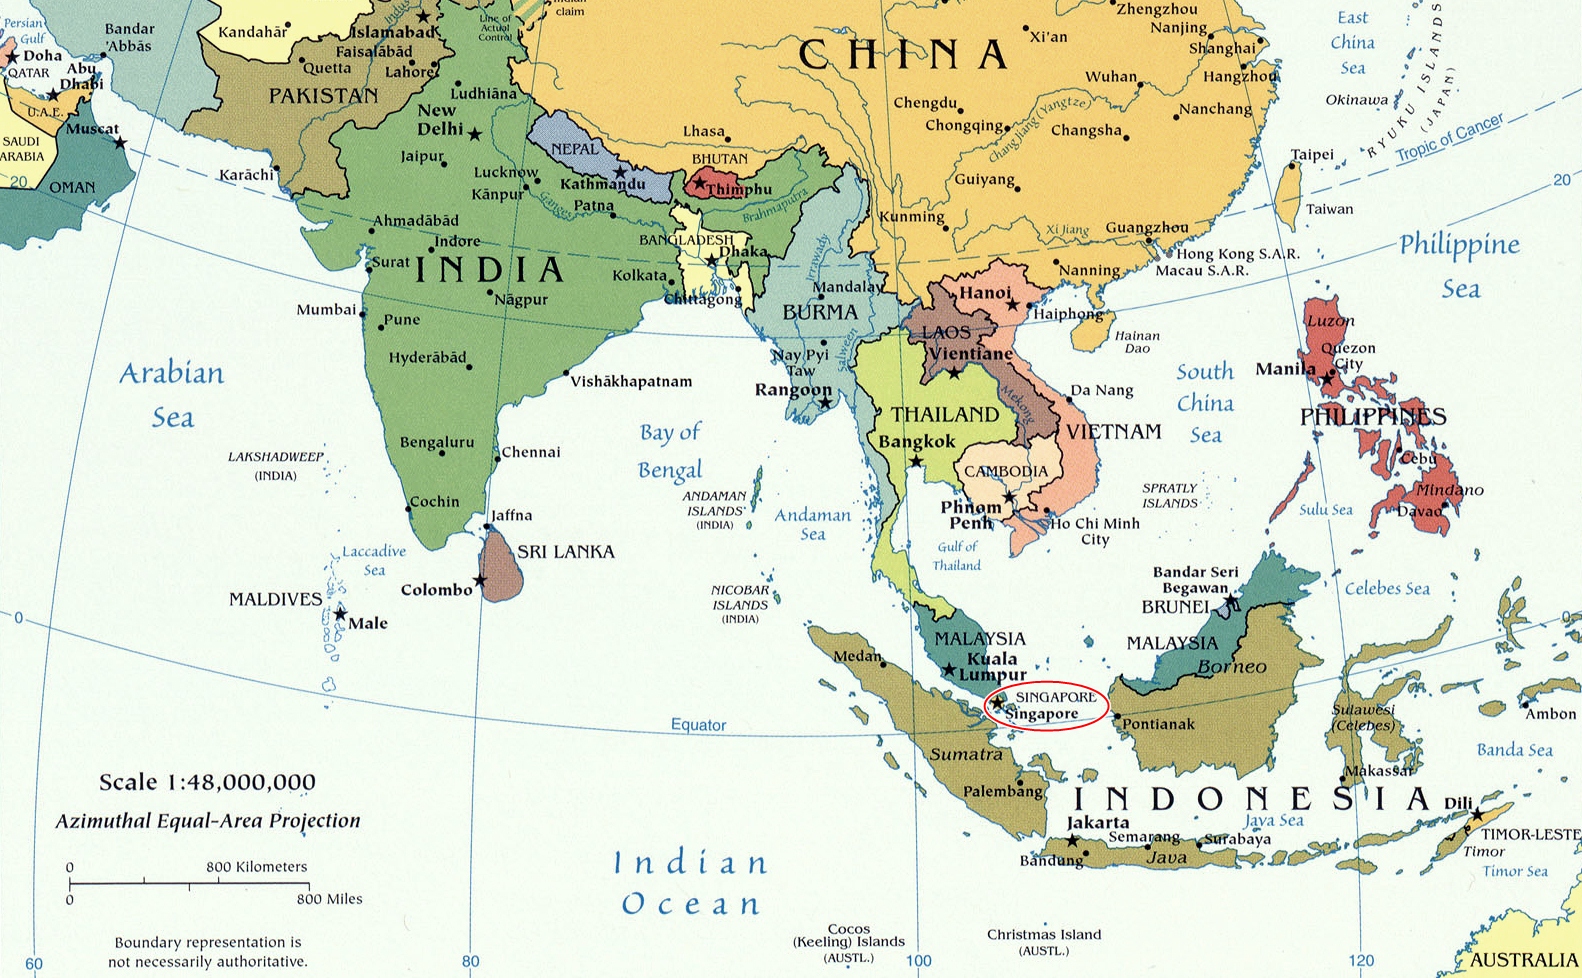 mapa politico de asia 2008